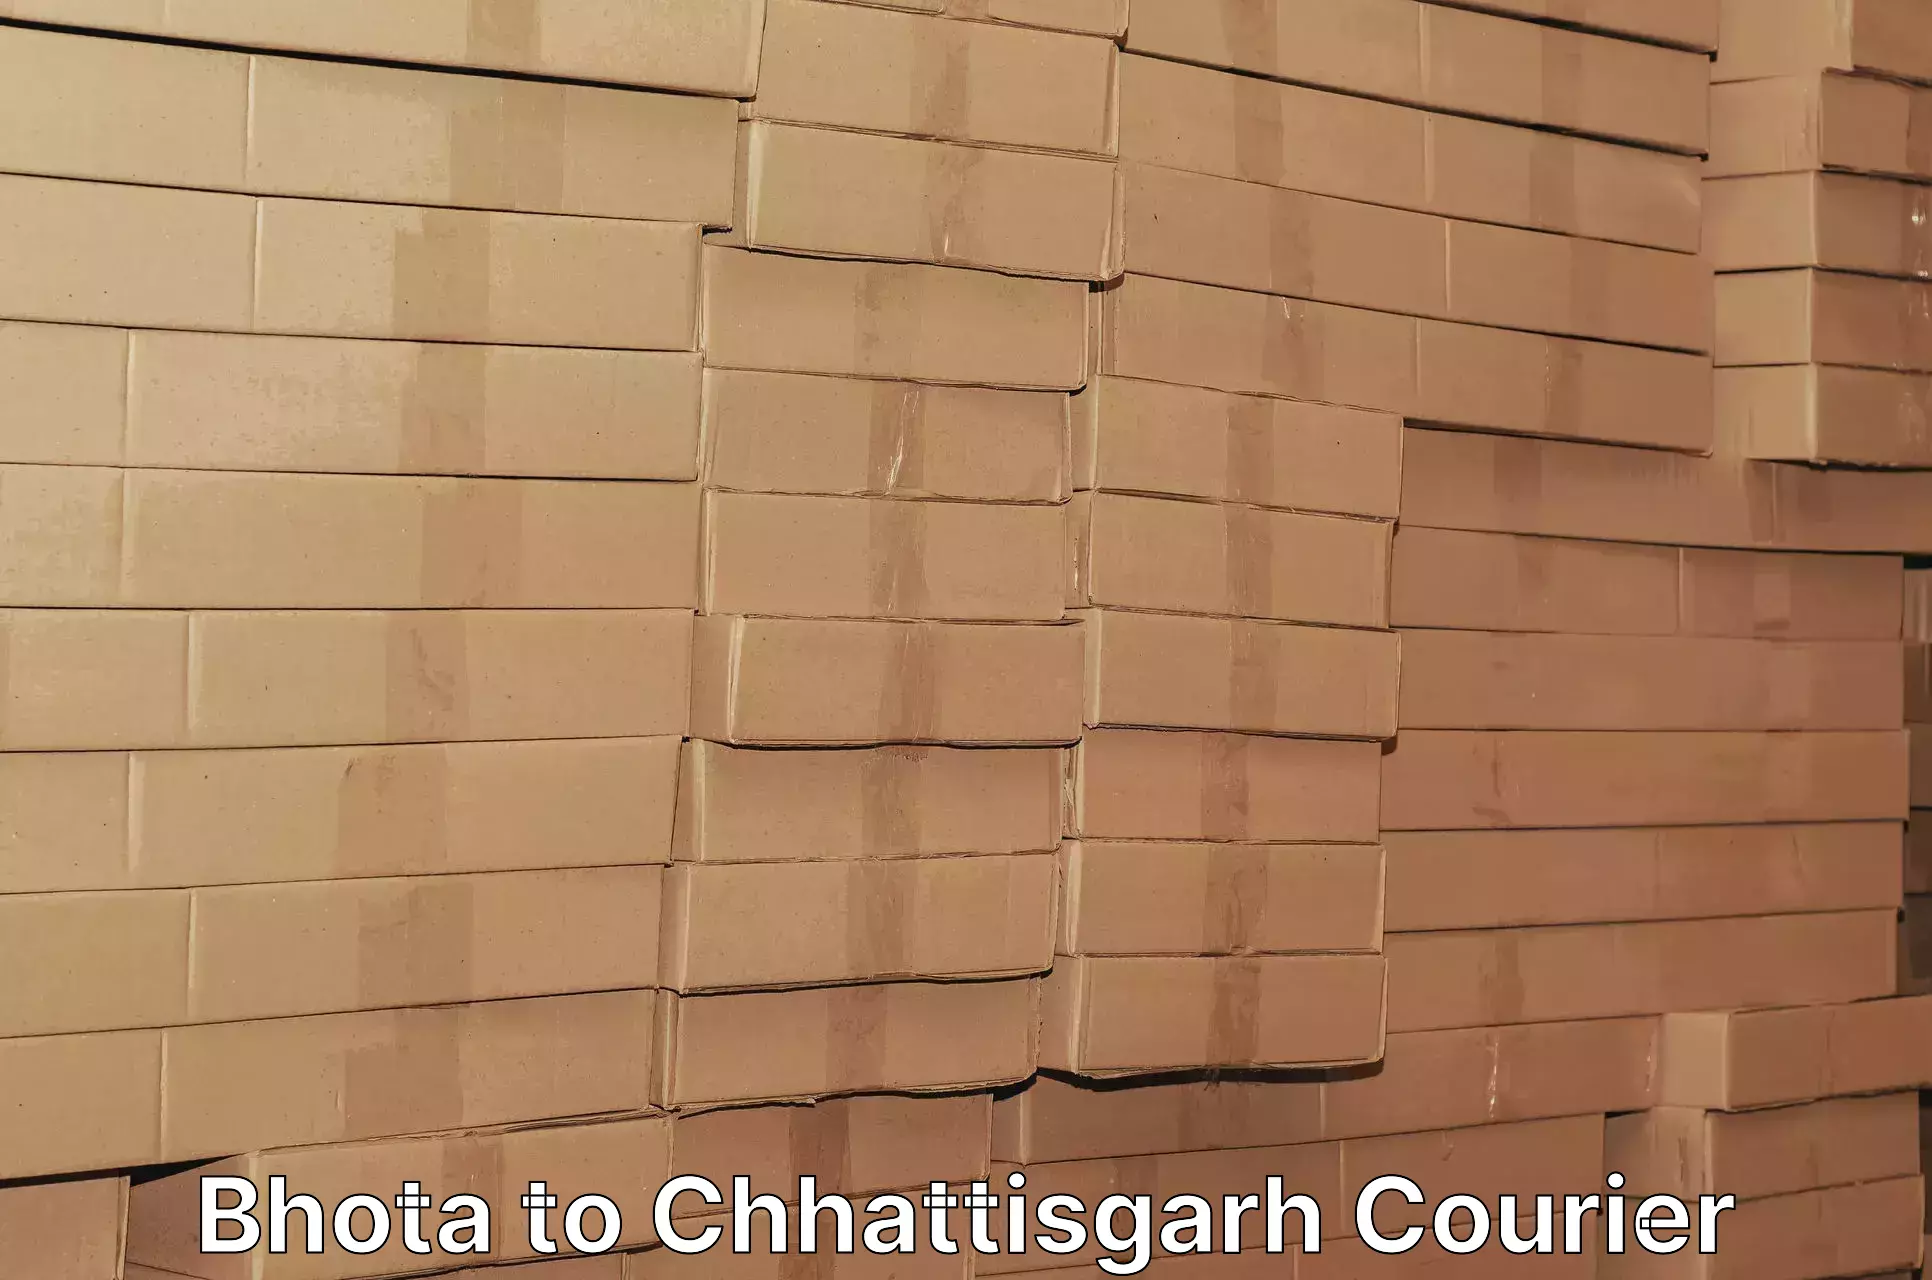 Logistics service provider Bhota to Chhattisgarh